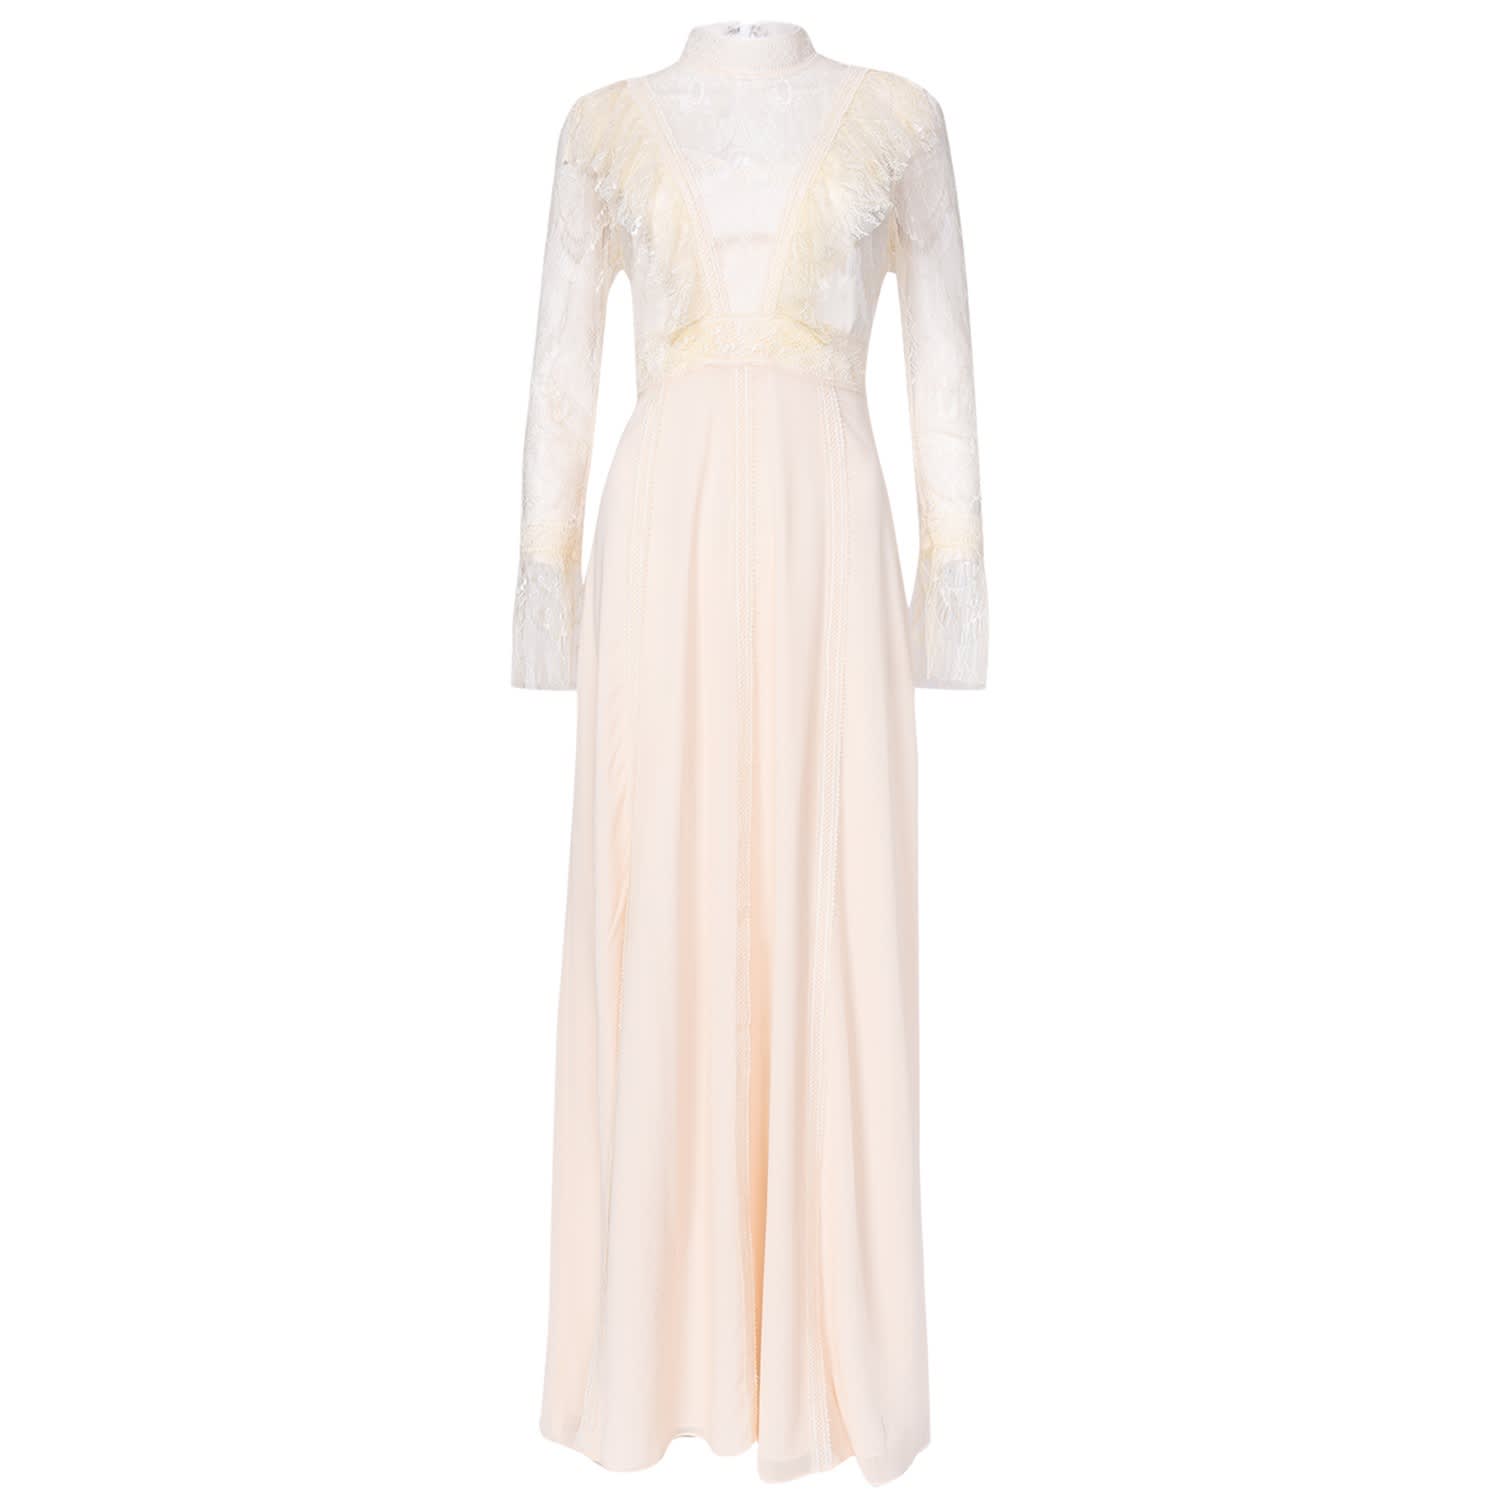 cream lace long sleeve dress